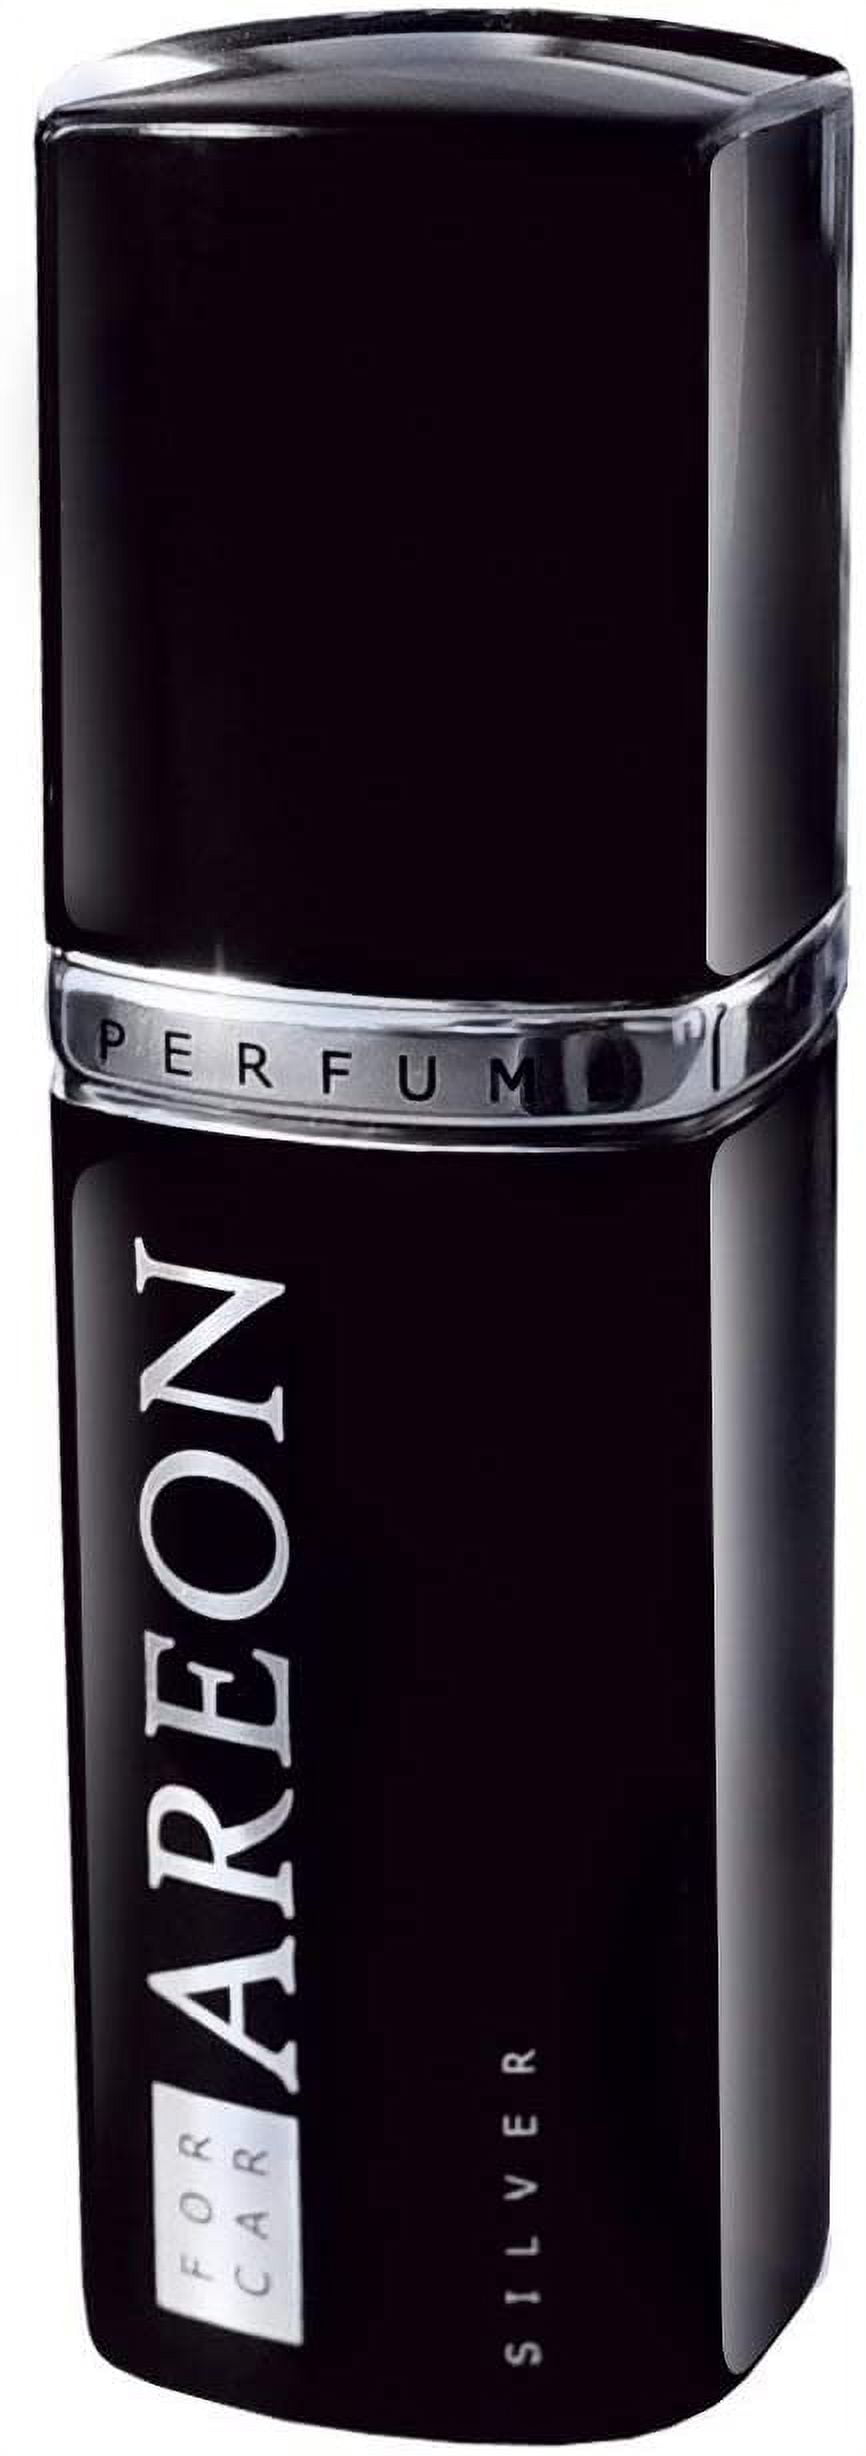 Aromatizante Areon Car Perfume (50 ml) Glass, Aroma Silver - coche